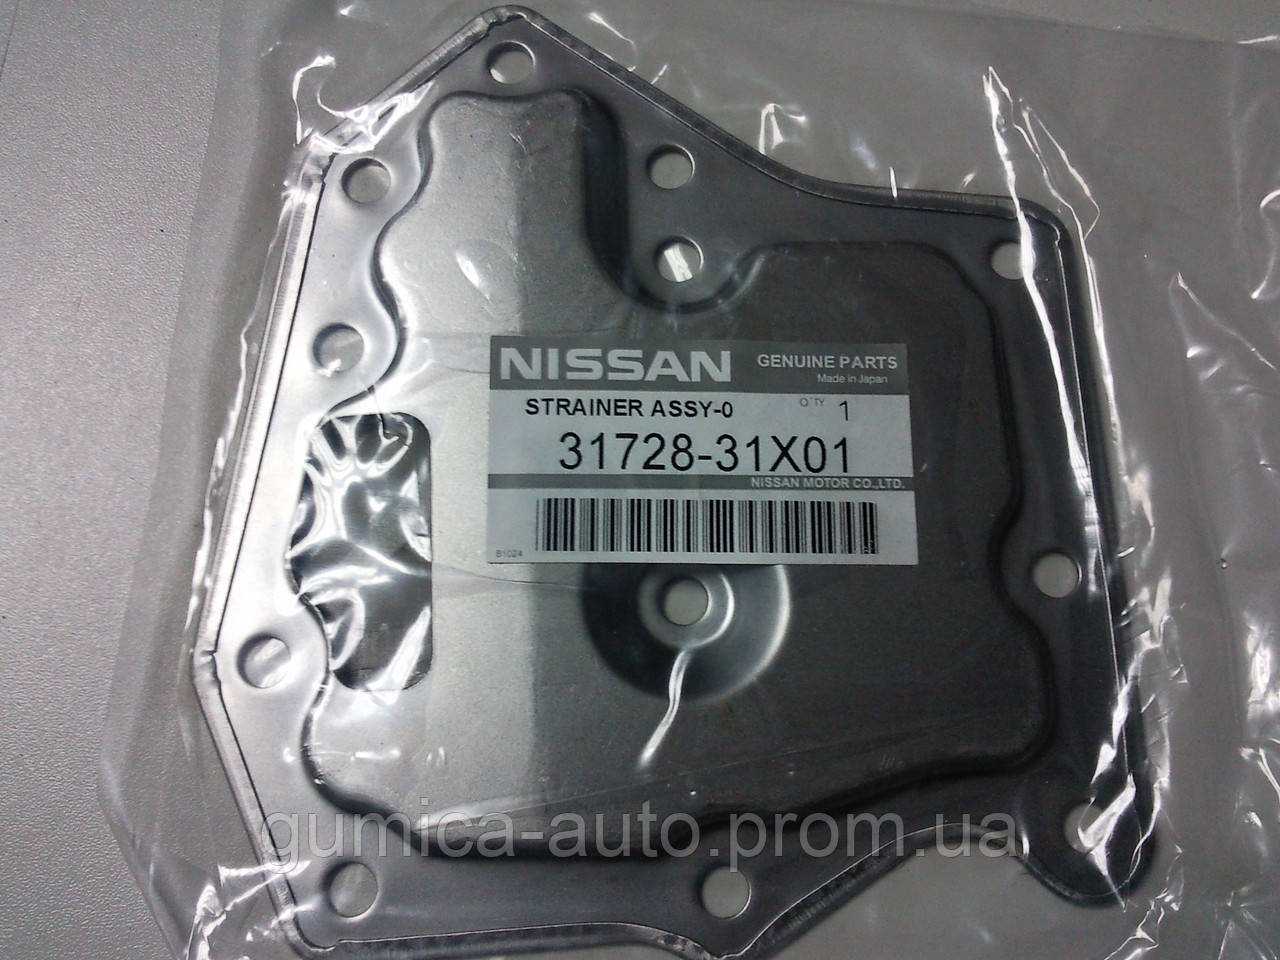 Фильтр акпп оригинал. Nissan 3172831x01 фильтр АКПП. Фильтр АКПП Ниссан ноут 1.2. Nissan Note 1.6л фильтр АКПП. Фильтр АКПП Ниссан ноут 1.6.